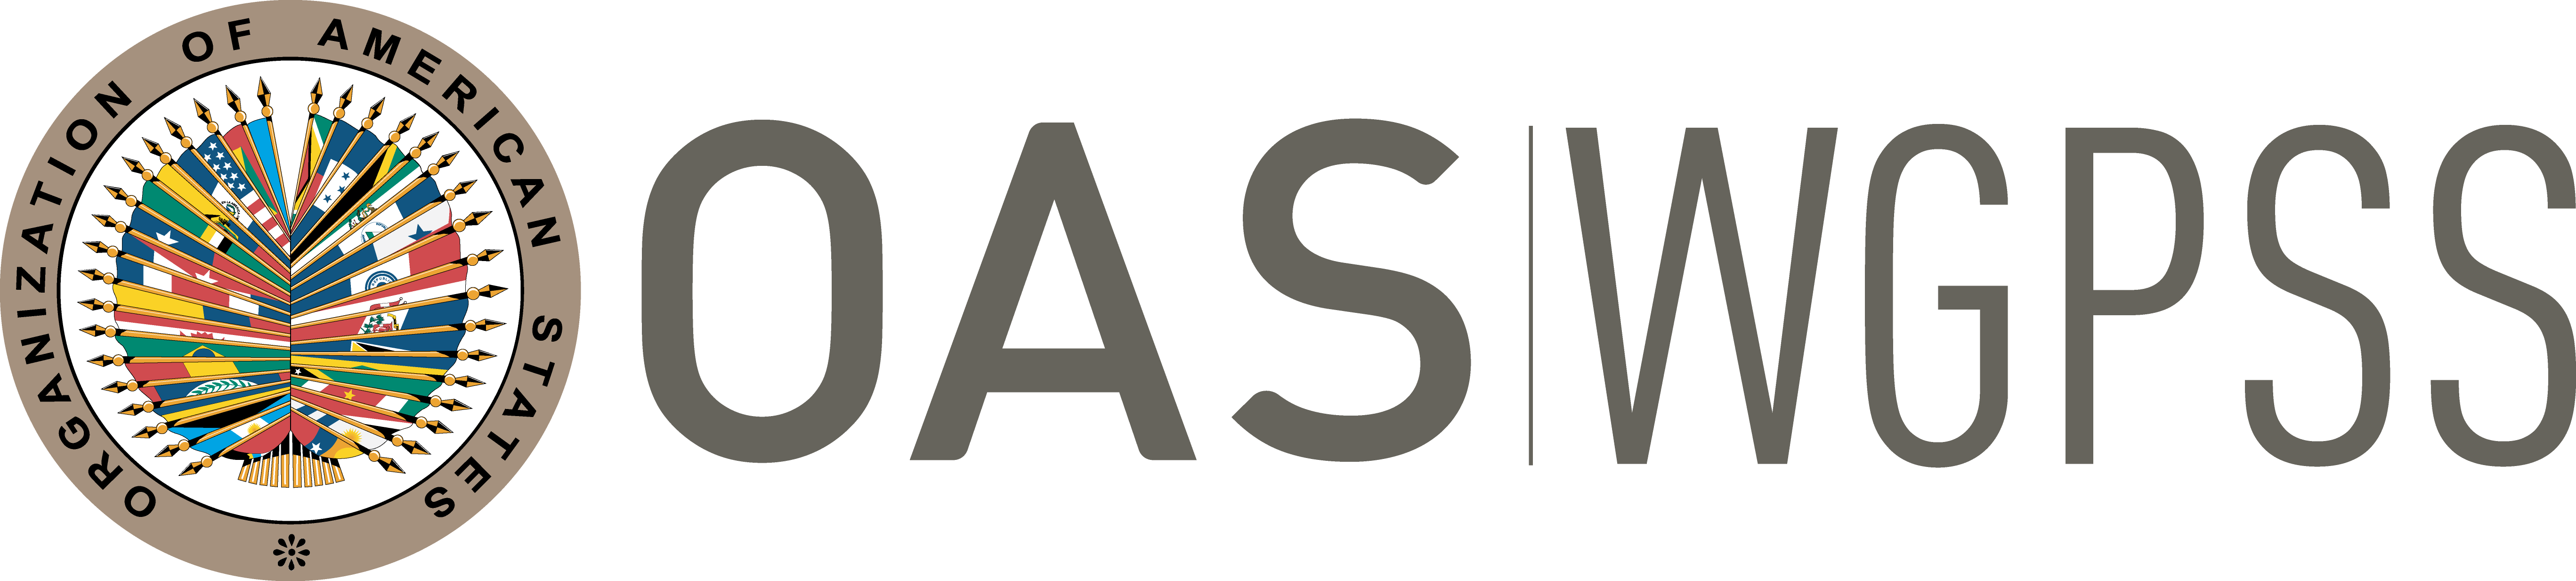 WGPSS logo